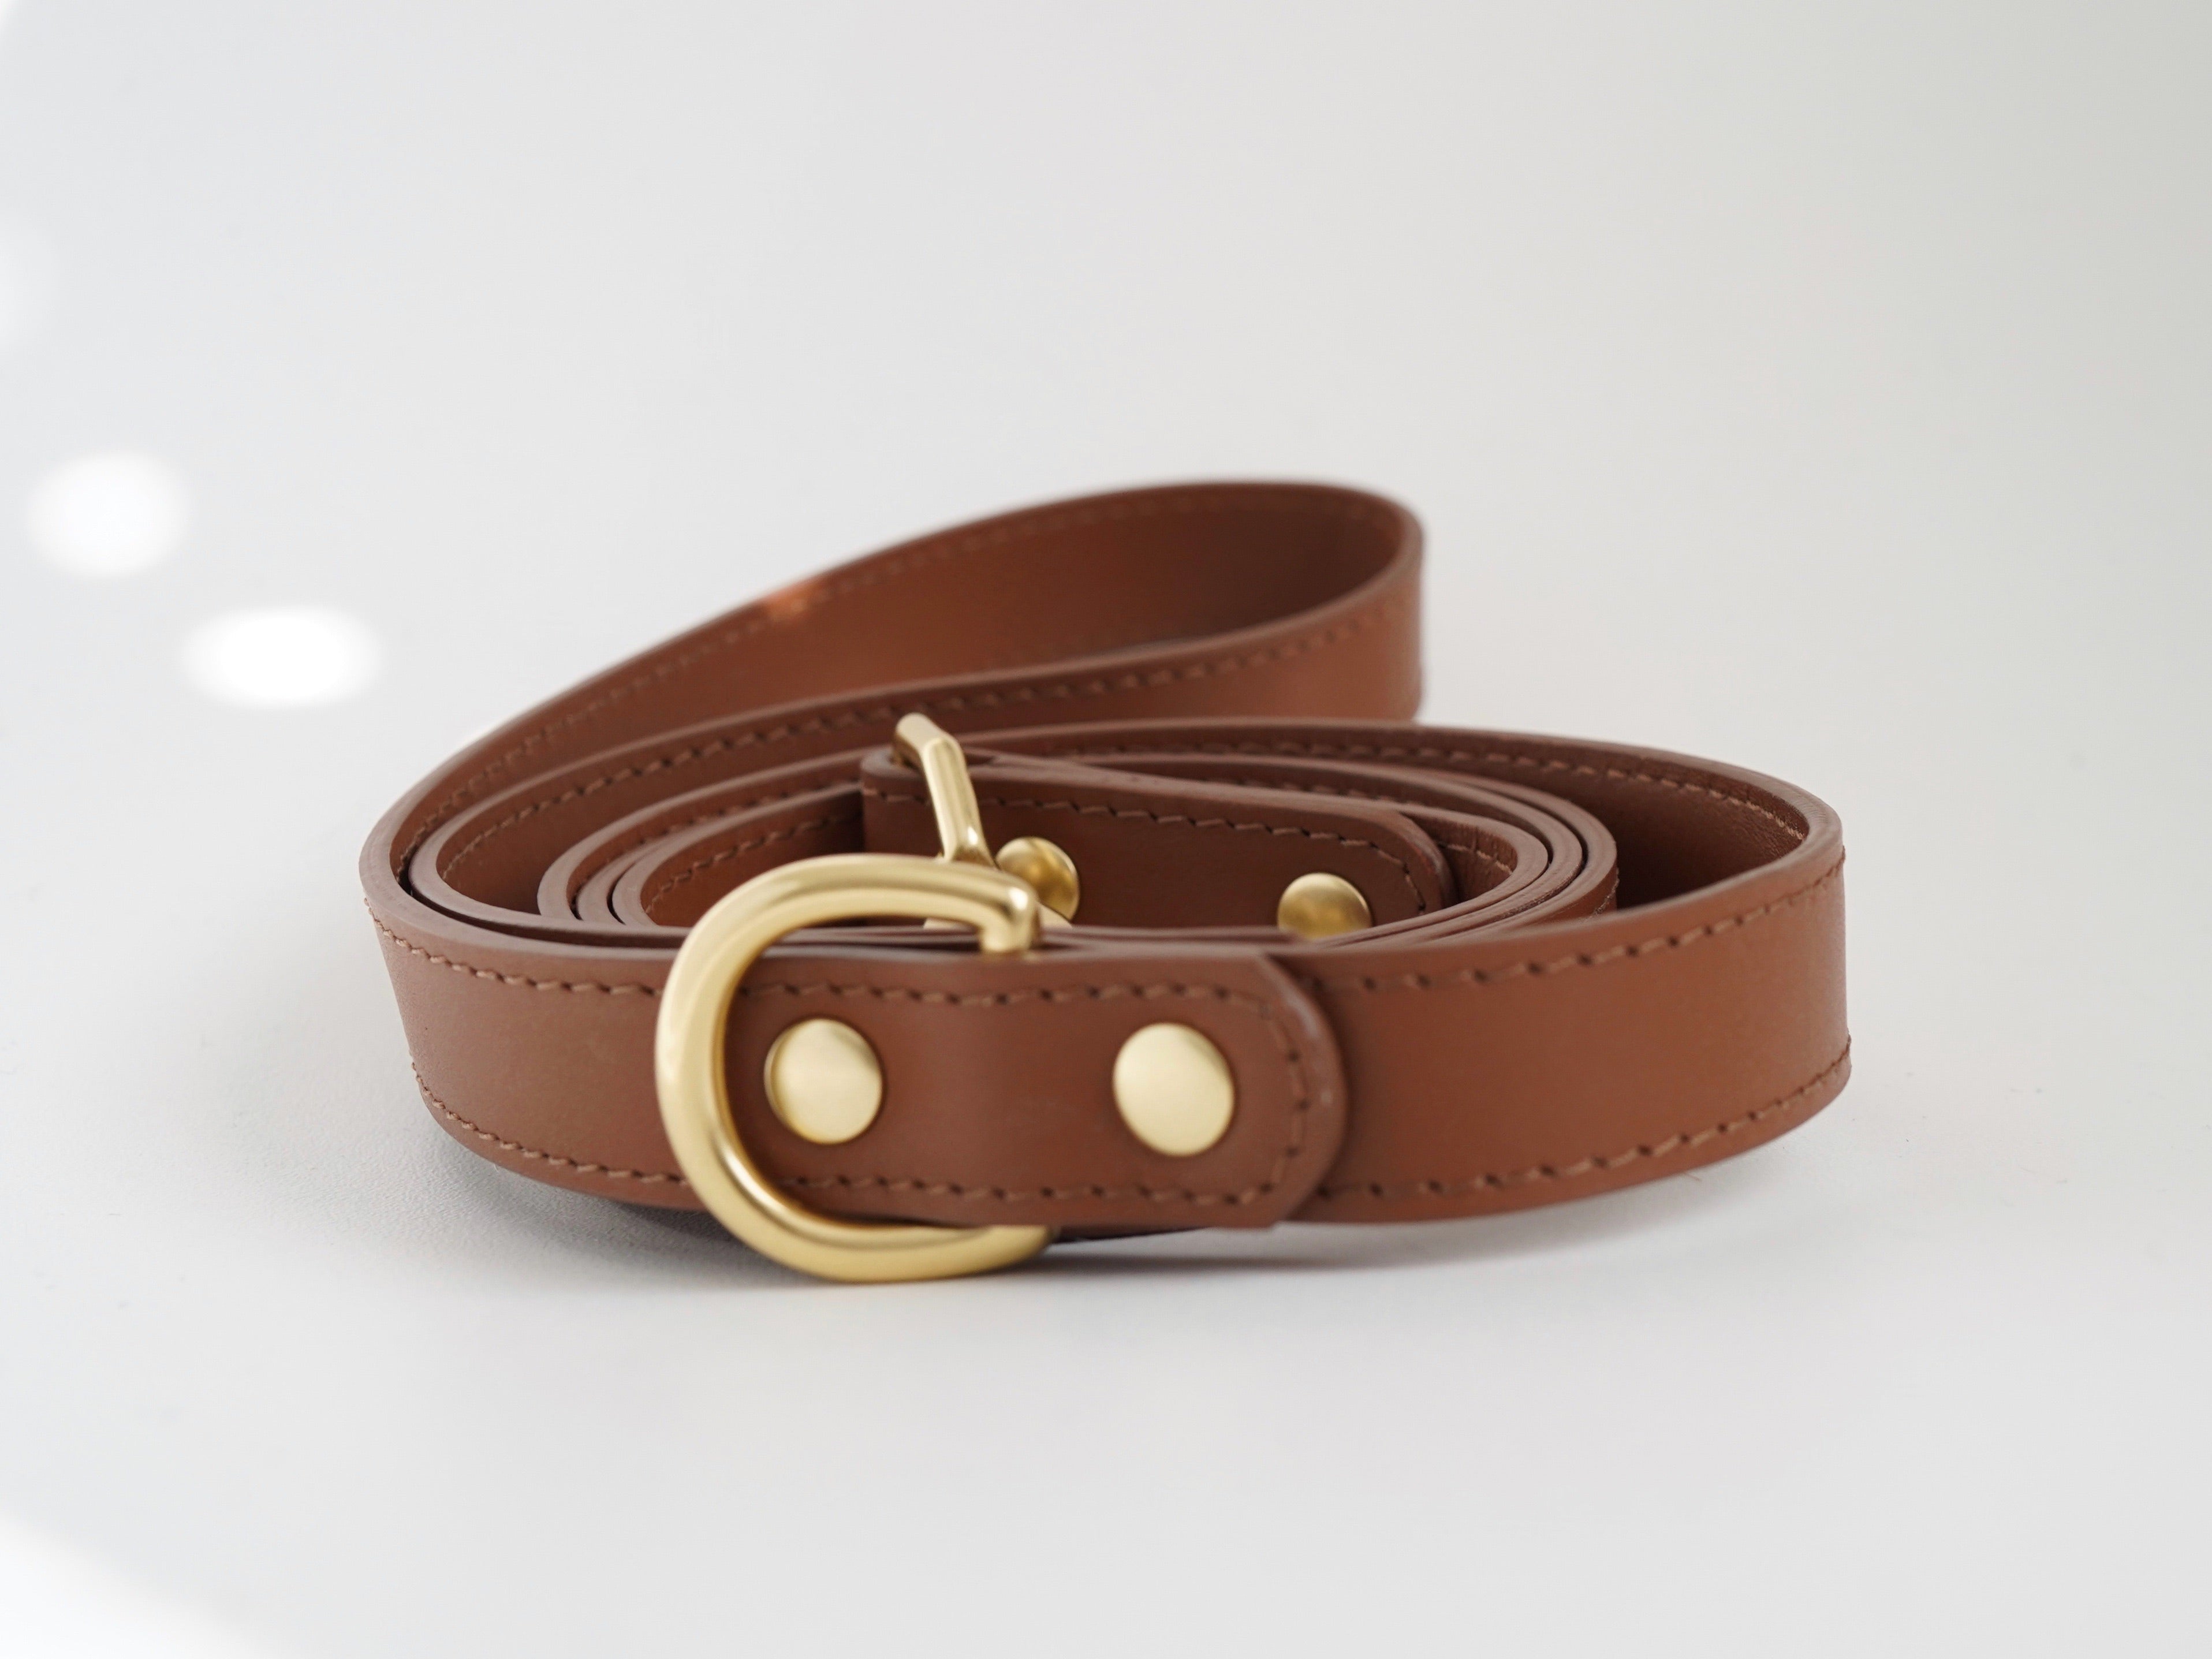 Saddle brown leather leash